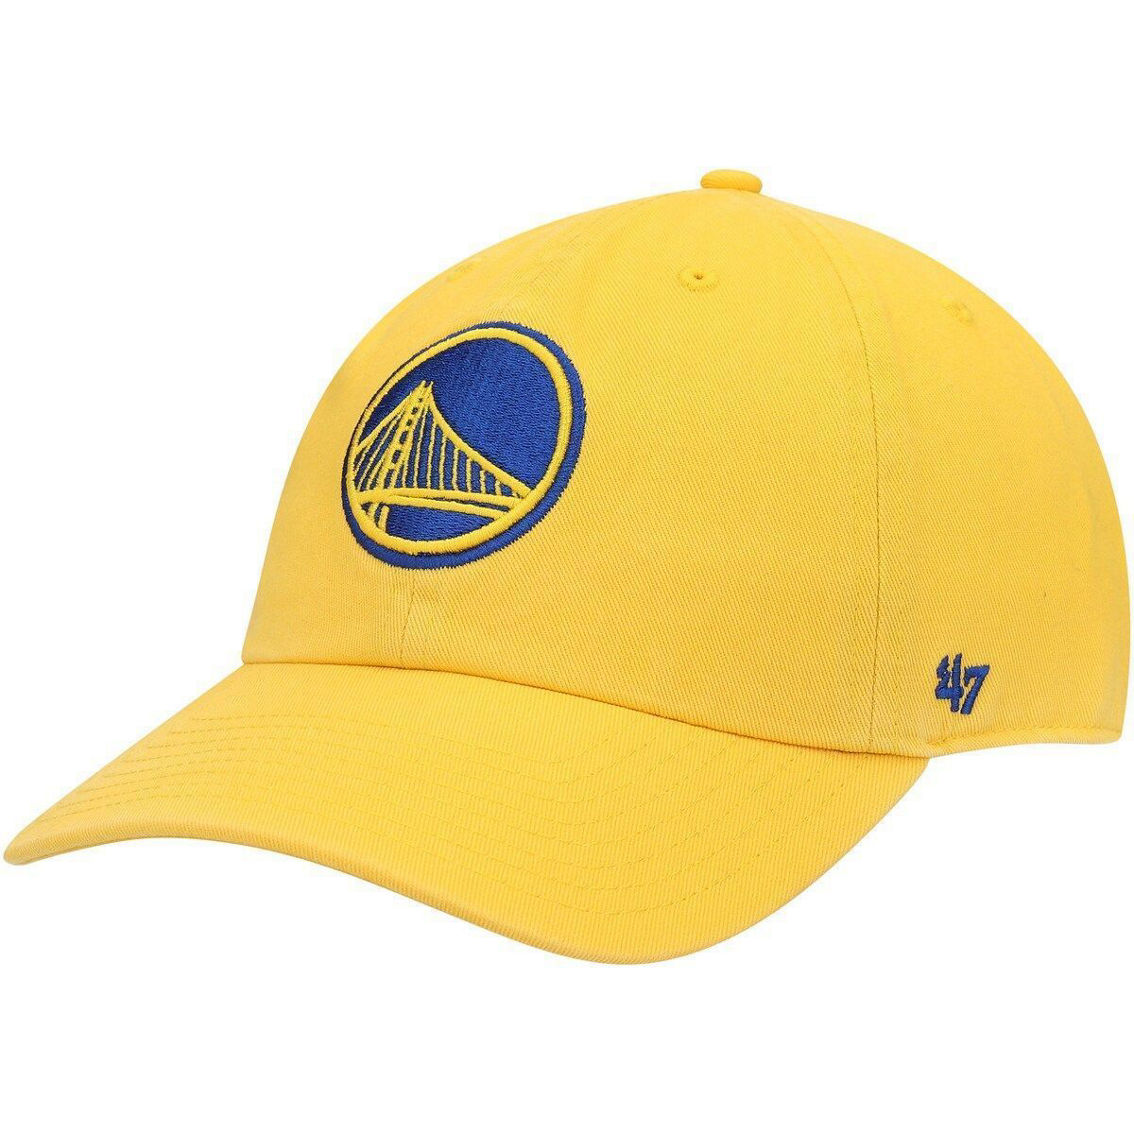 '47 Men's Gold Golden State Warriors Team Clean Up Adjustable Hat - Image 2 of 4